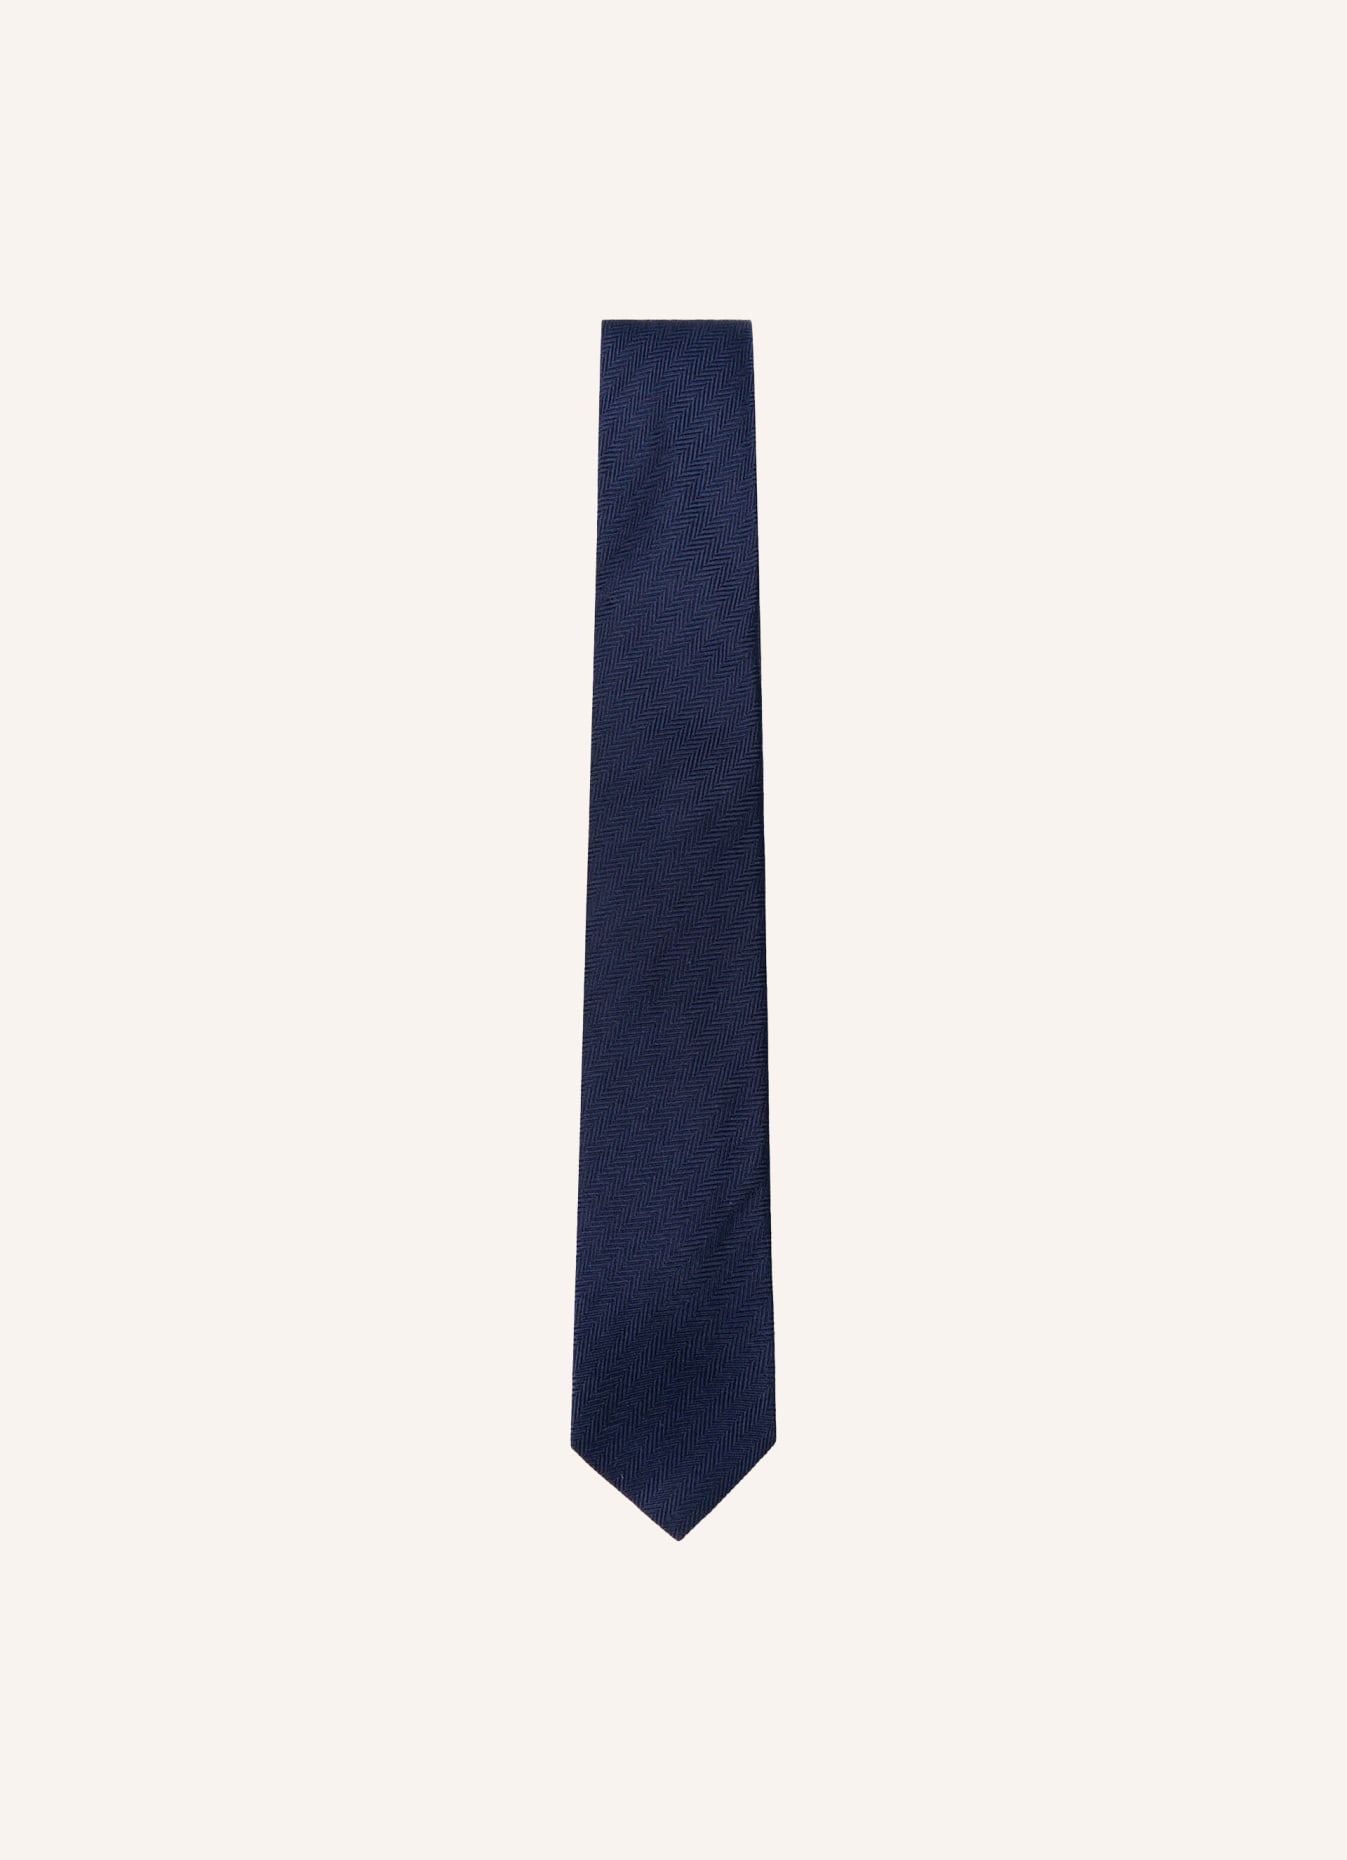 HACKETT LONDON Krawatte MELANGE HERRINGBONE, Farbe: DUNKELBLAU (Bild 1)